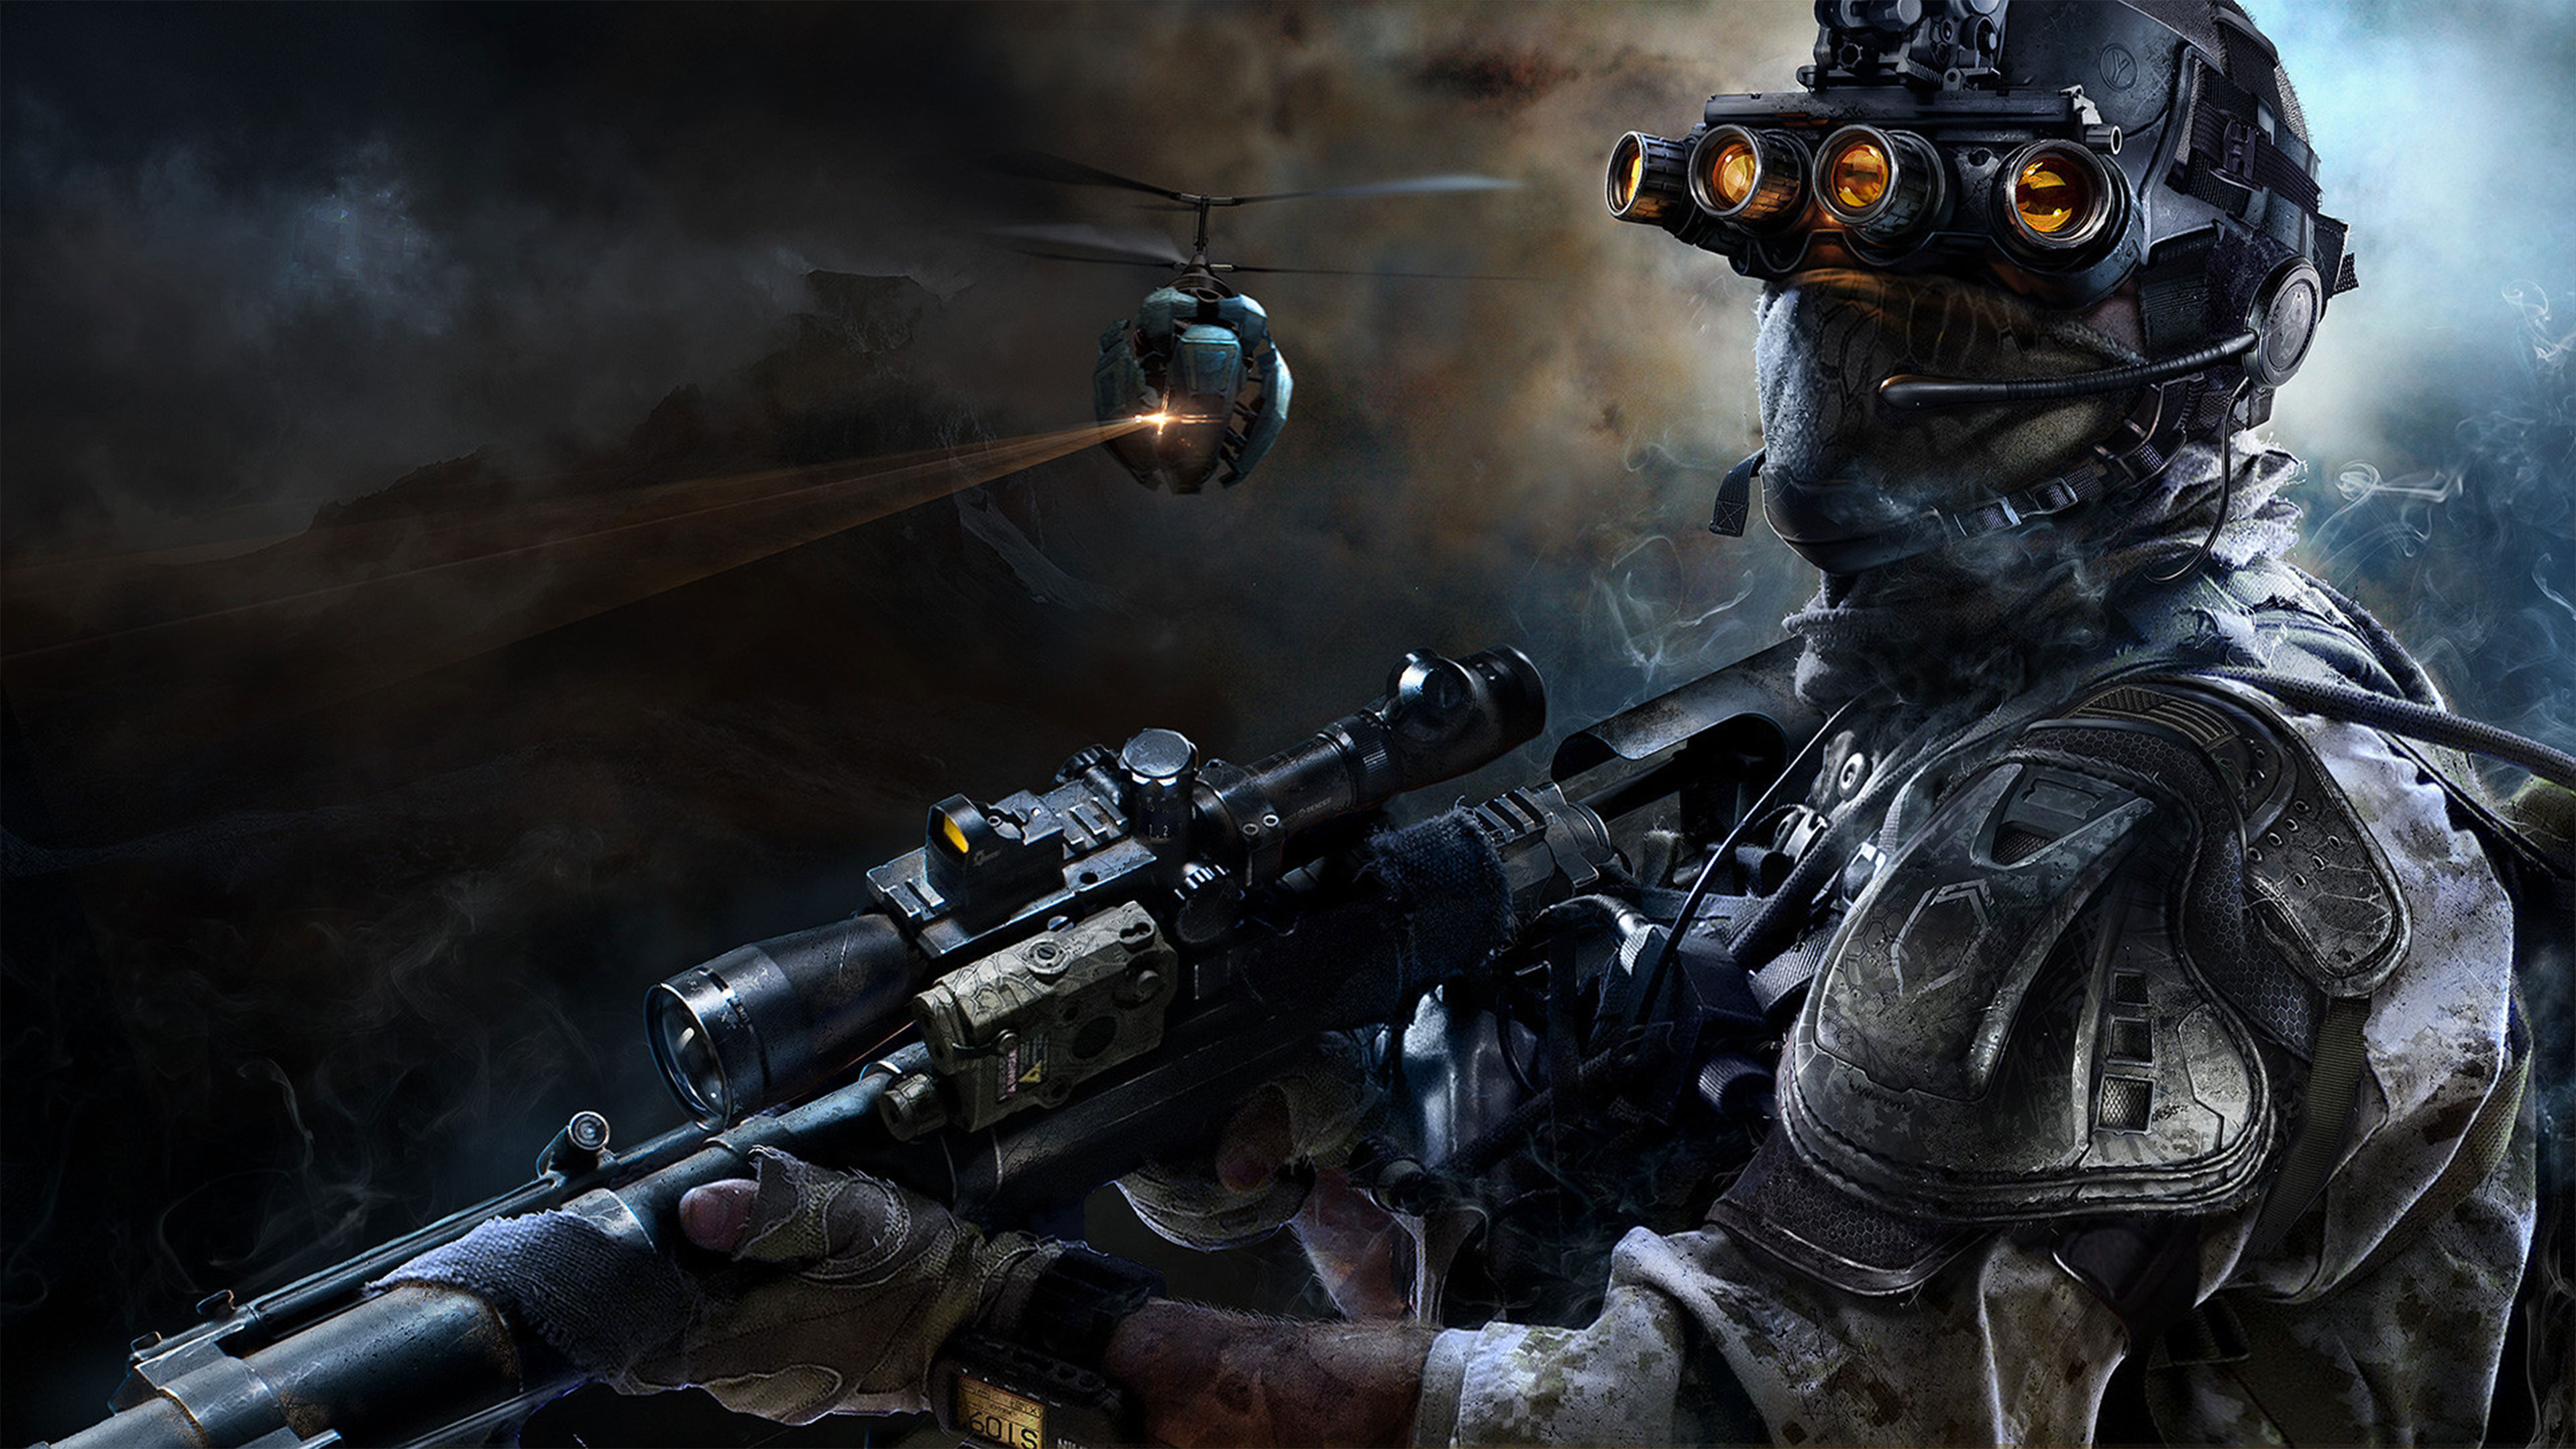 Sniper Ghost Warrior 3 Wallpapers In Ultra Hd 4k Gameranx